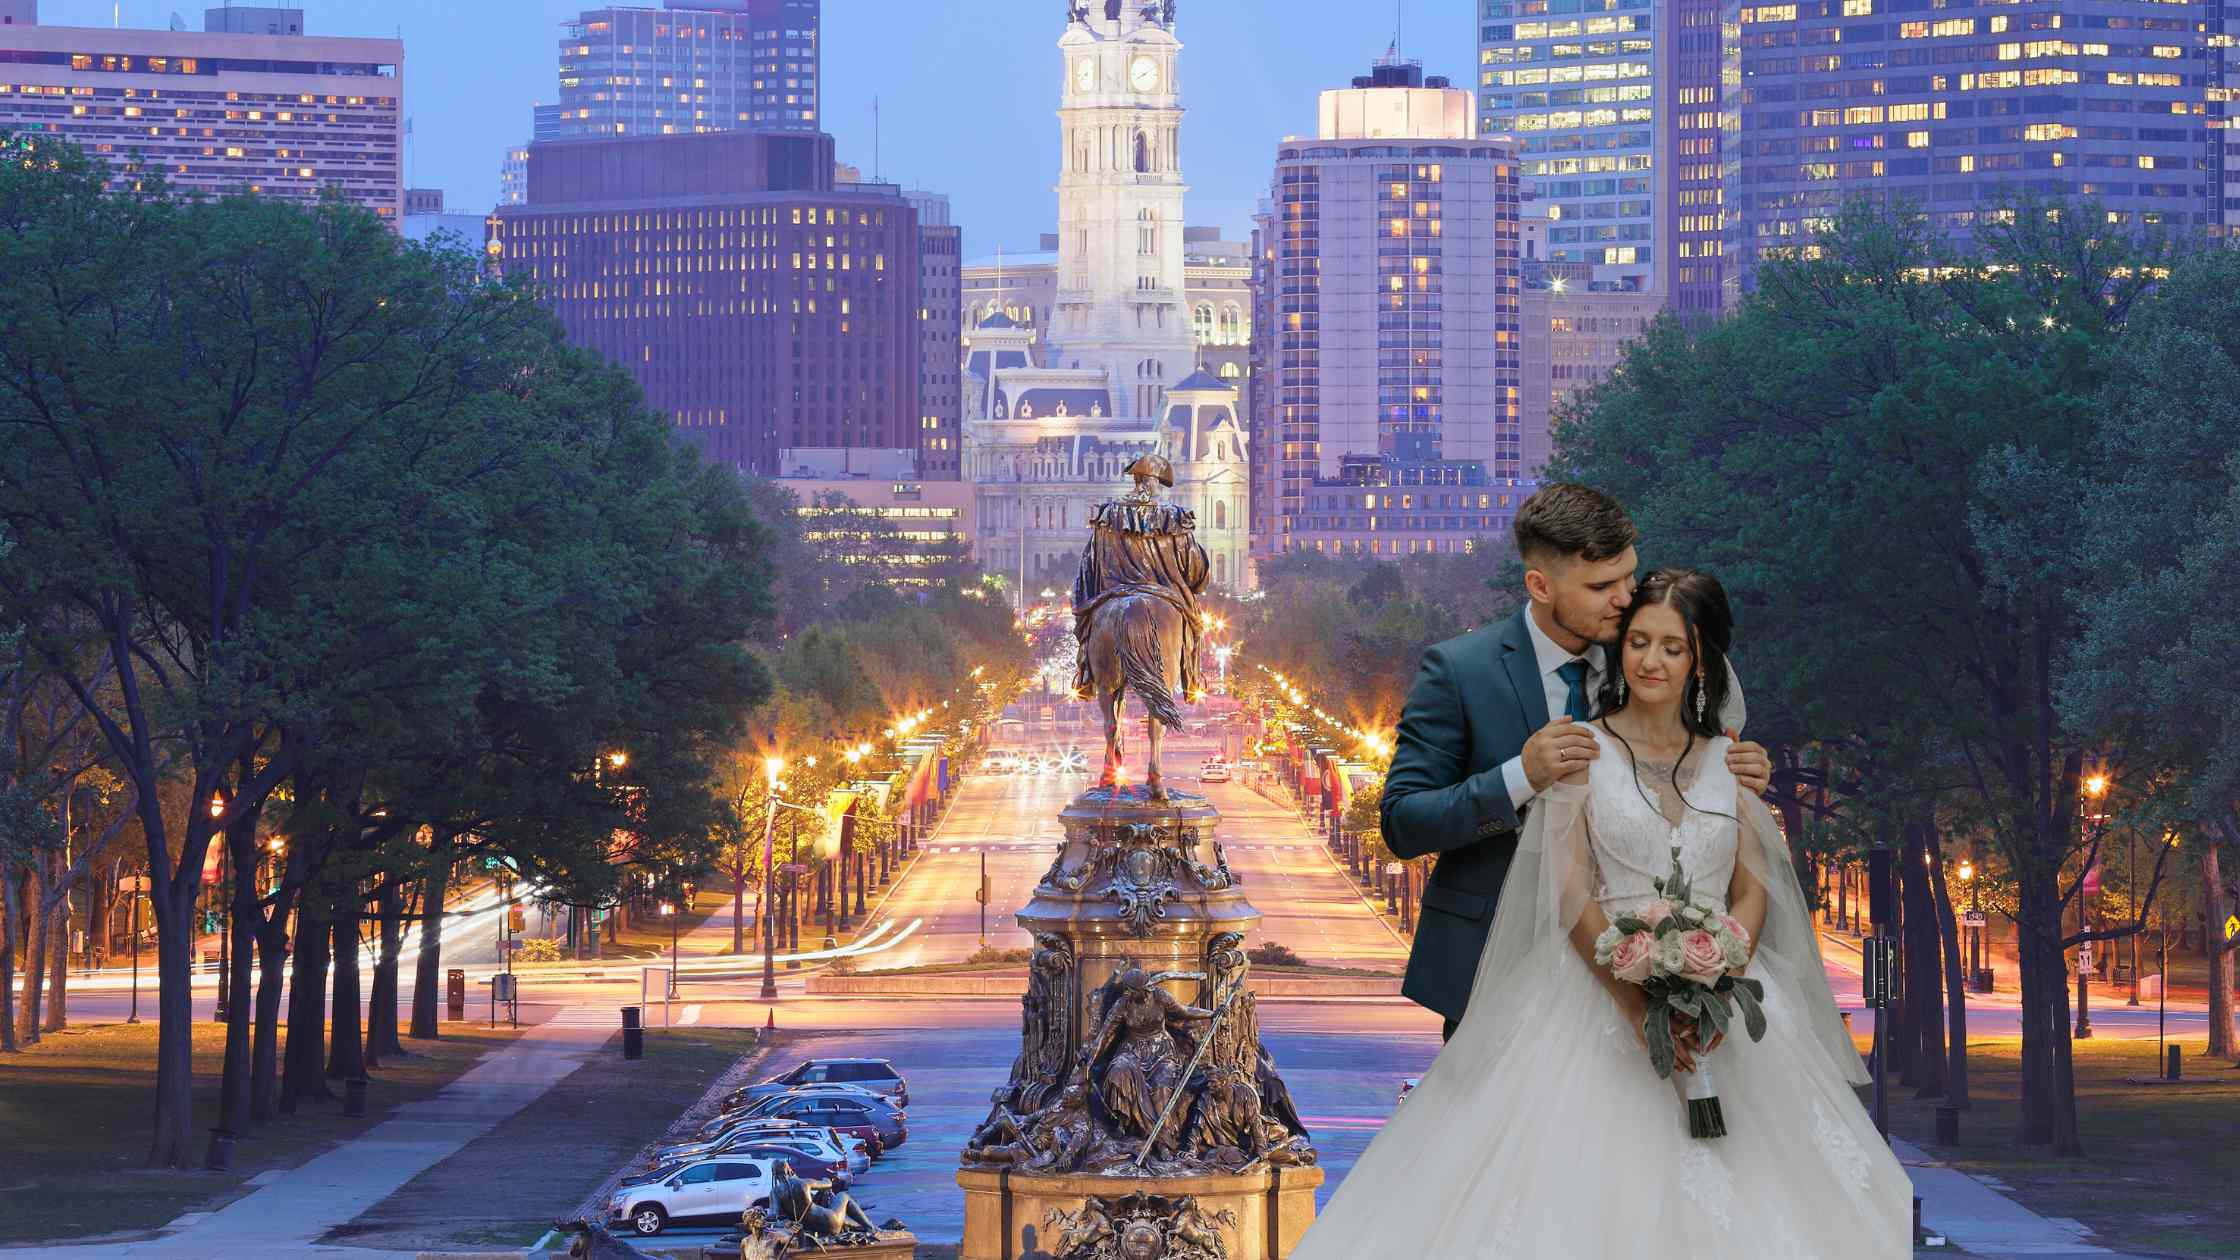 Philadelphia Wedding Planning, Philadelphia Wedding Photographers, Your Complete Wedding Planning Resource